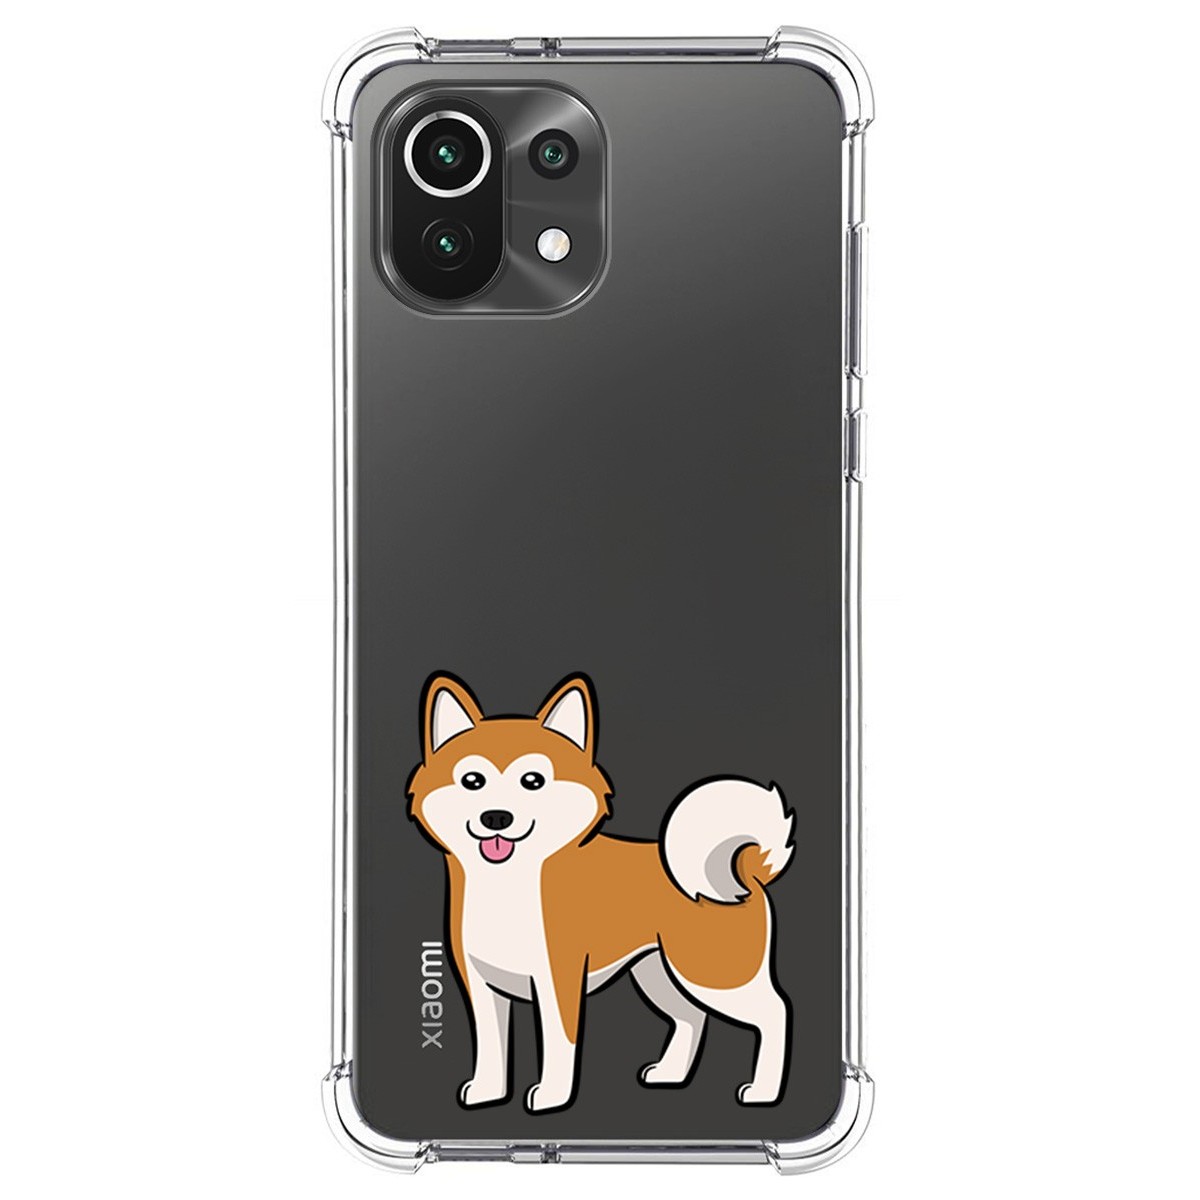 Funda Silicona Antigolpes para Xiaomi Mi 11 Lite 4G / 5G / 5G NE diseño Perros 02 Dibujos